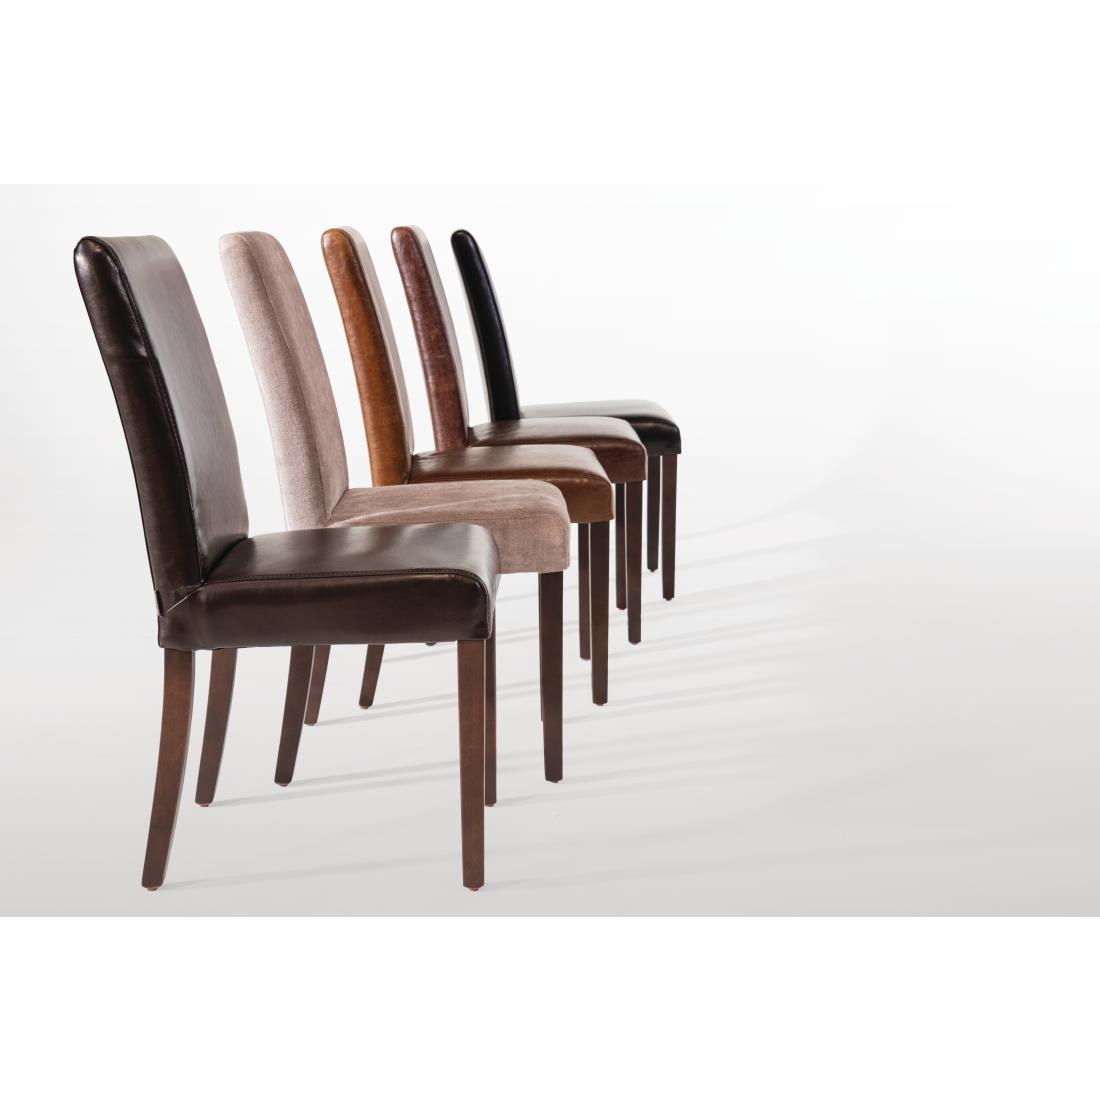 Bolero Dining Chairs Beige (Pack of 2) - GK999  - 8